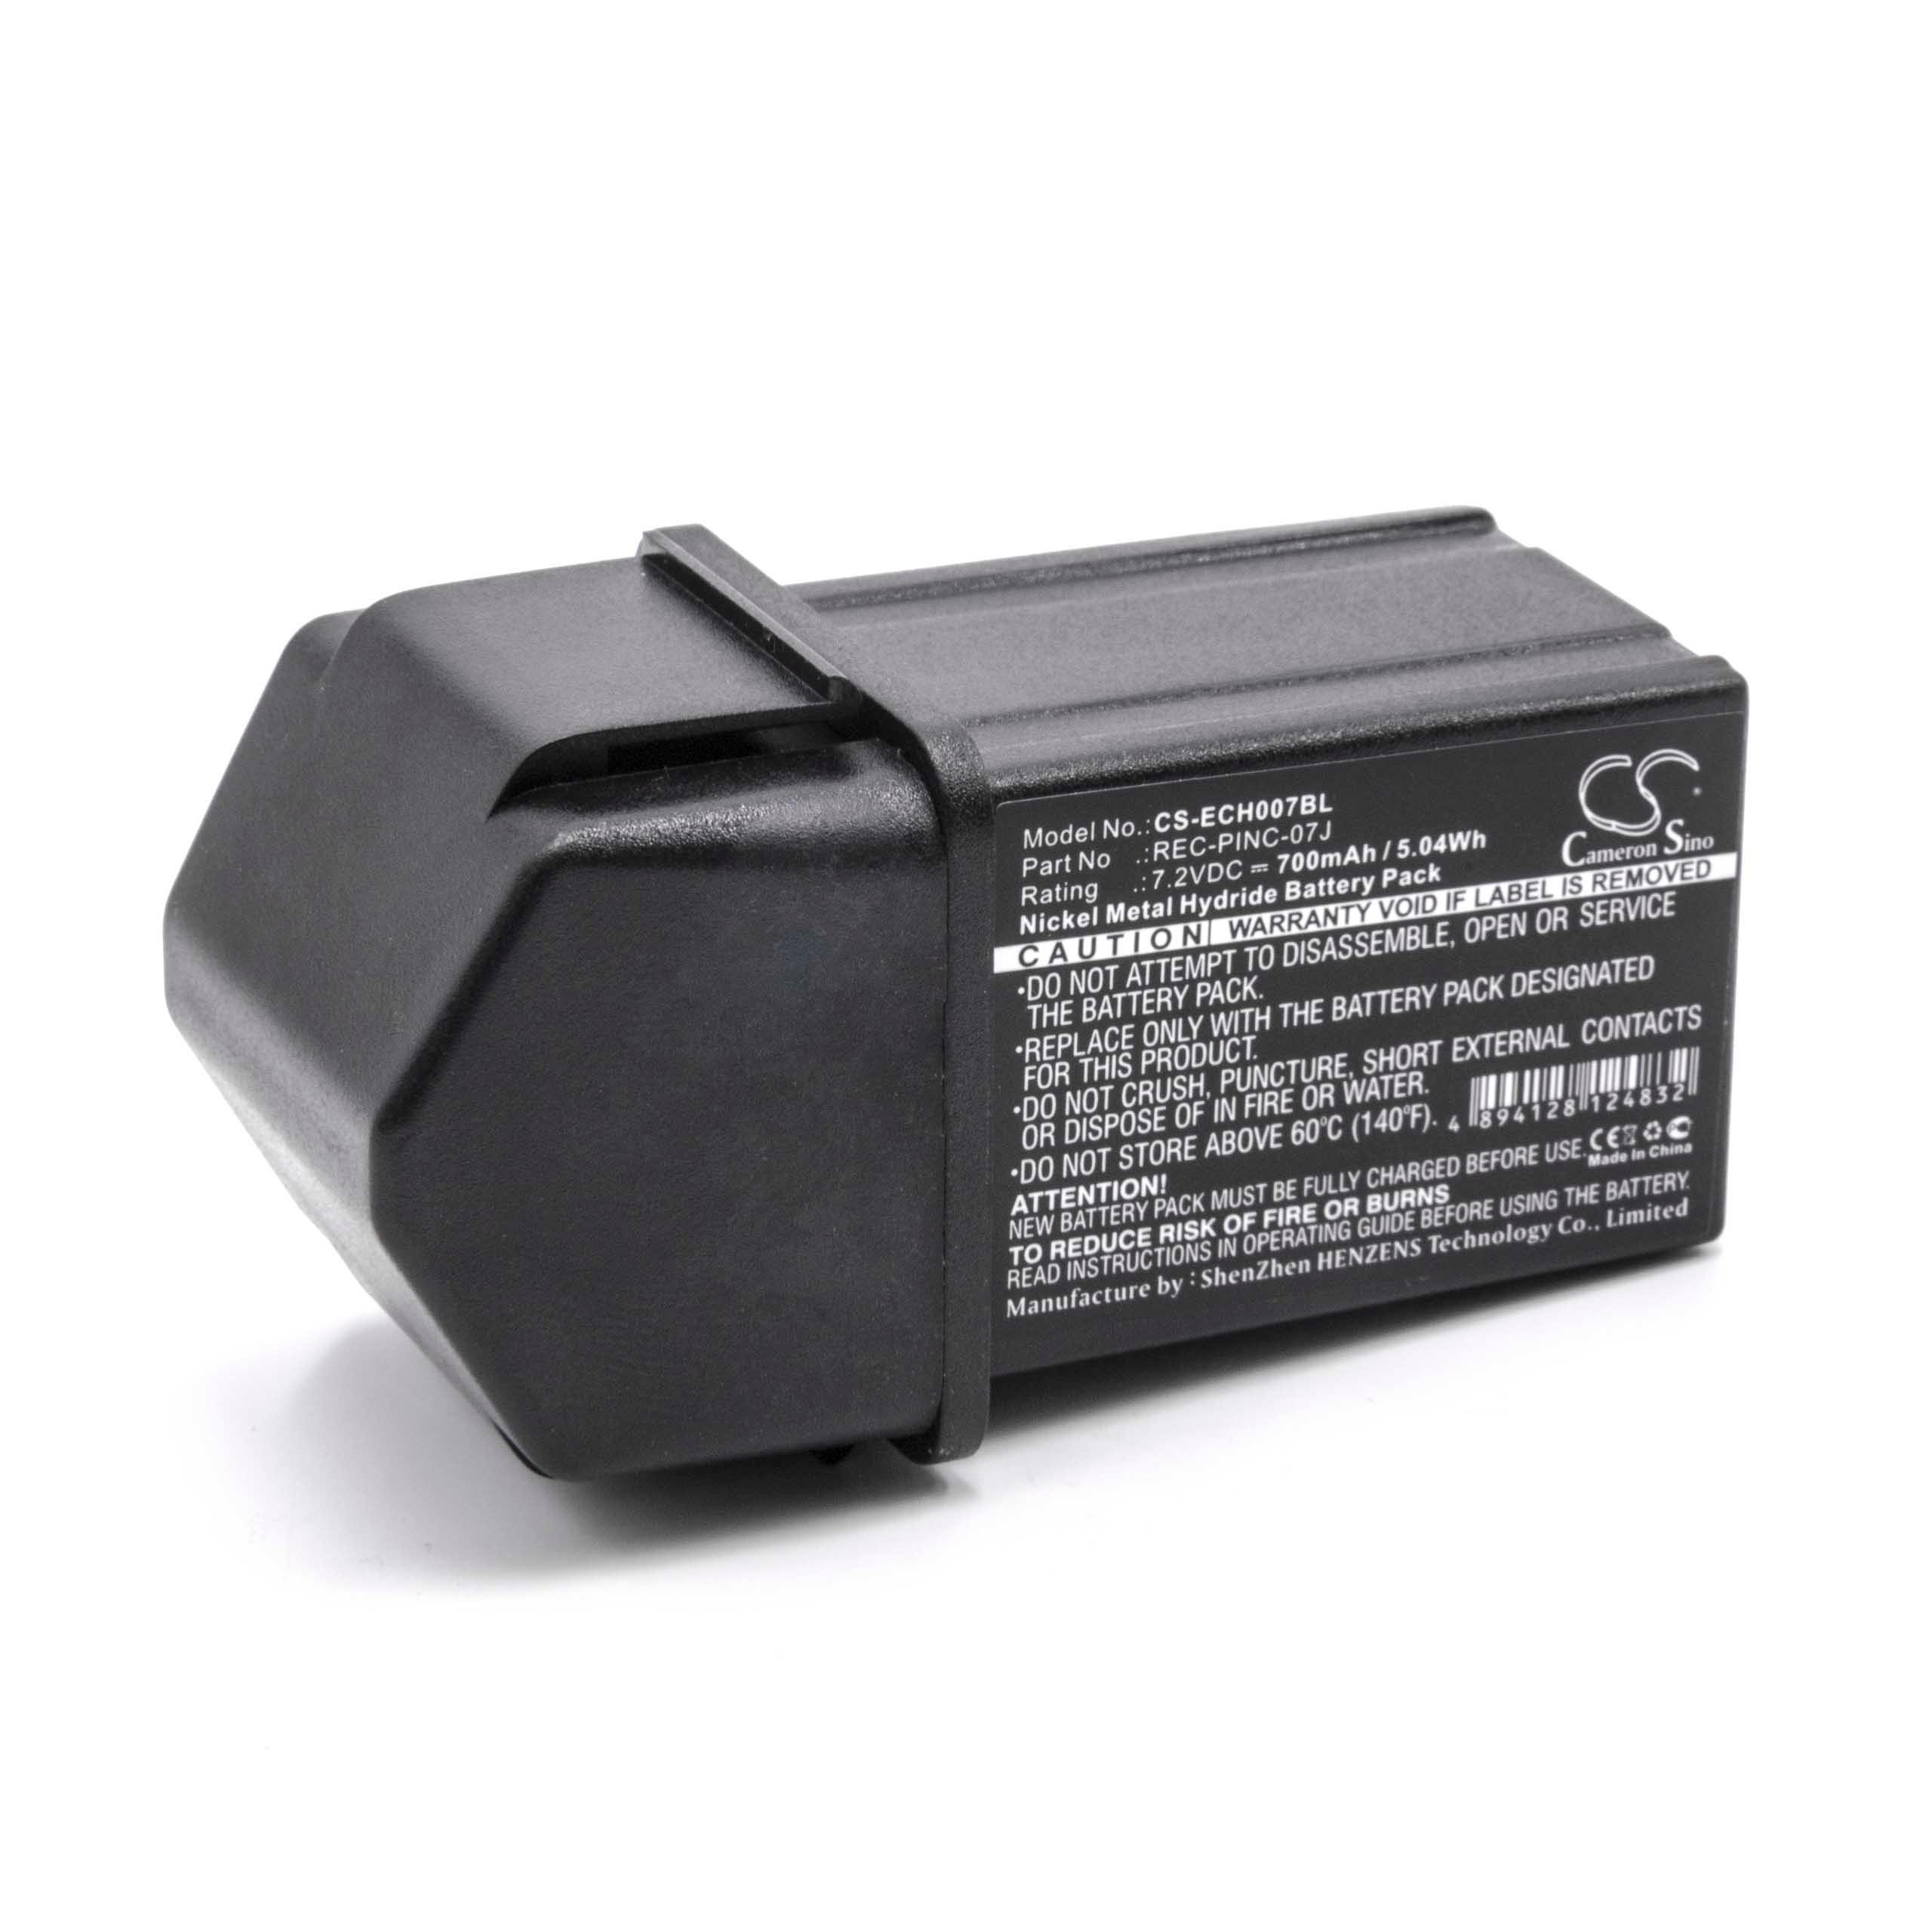 Remote Control Battery Replacement for Elca REC-PINC-07J, PINC 07MH, PINC-07MH - 700mAh 7.2V NiMH